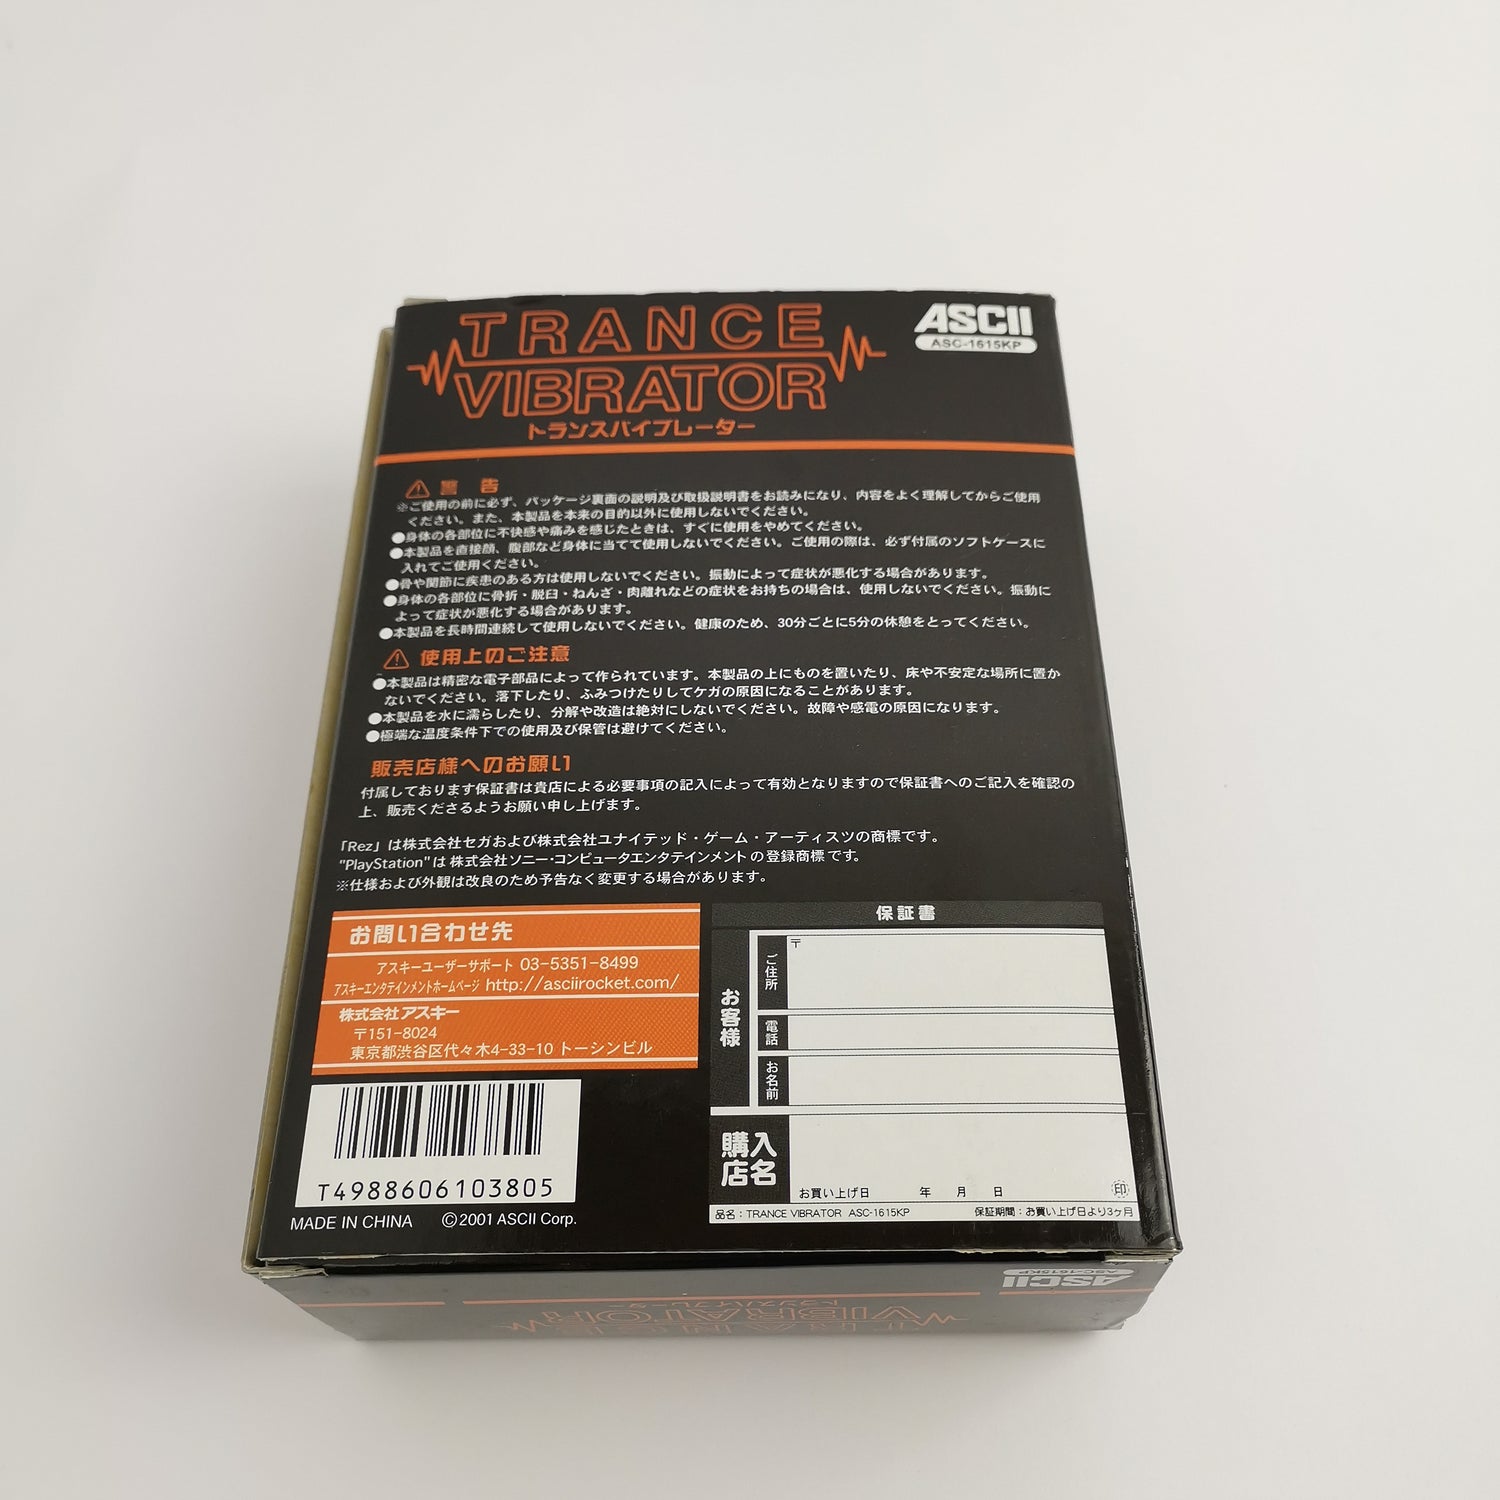 Sony Playstation 2 Accessories: Trance Vibrator Ascii | REZ OVP NEW - NTSC-J Japan